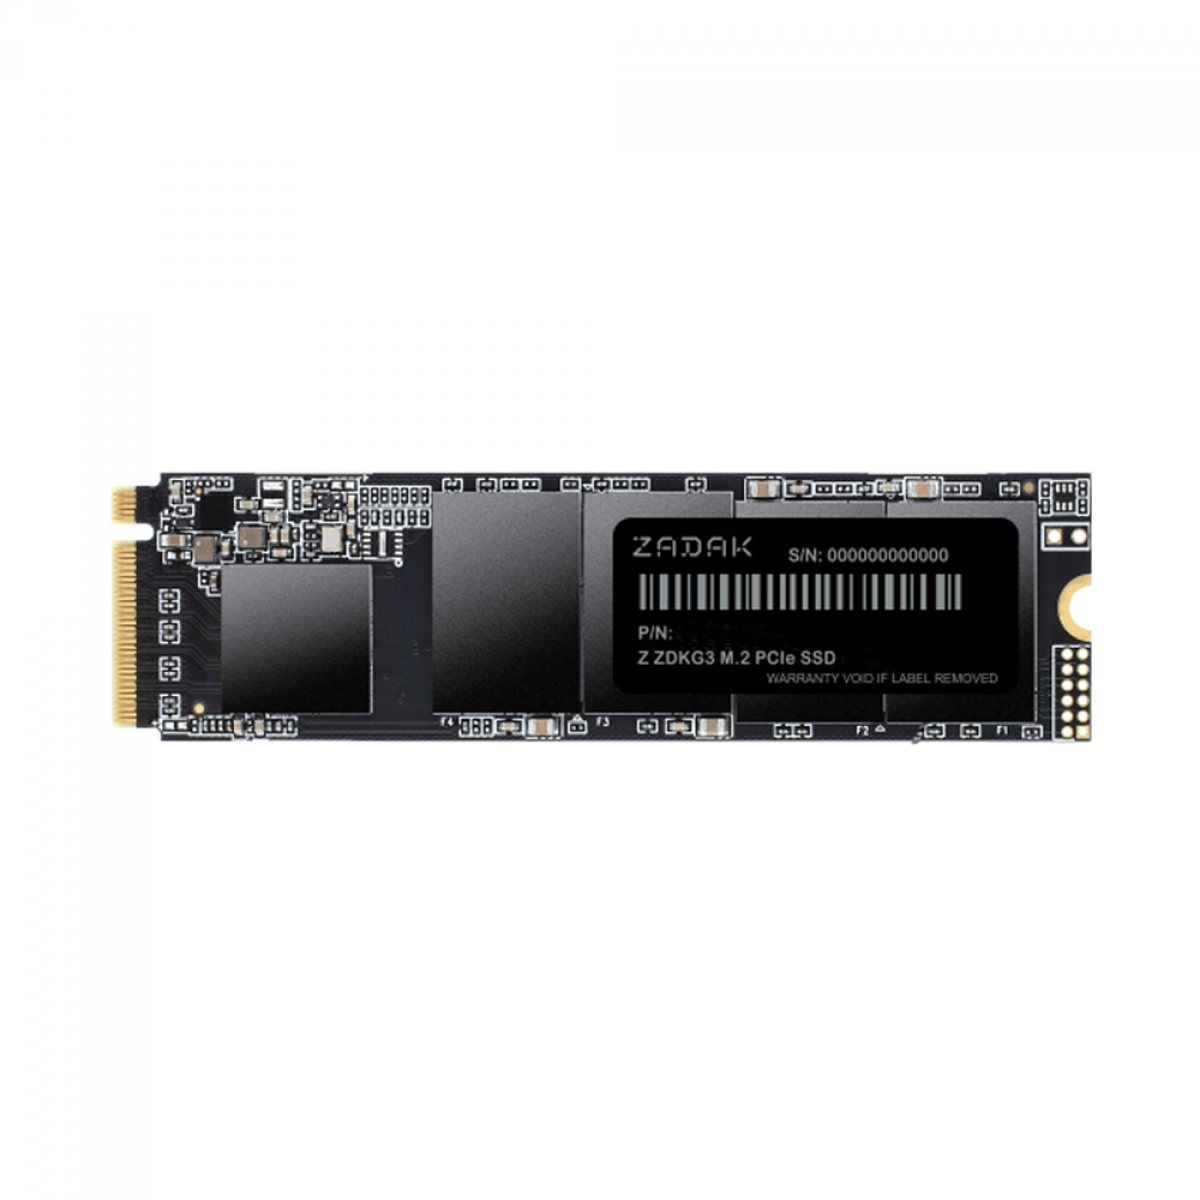 SSD Zadak ZDKG3 256GB, PCIe Gen 3x4 M.2 NVMe, Leitura 2100MBs e Gravação 1300MBs, ZS256GZDKG3-1